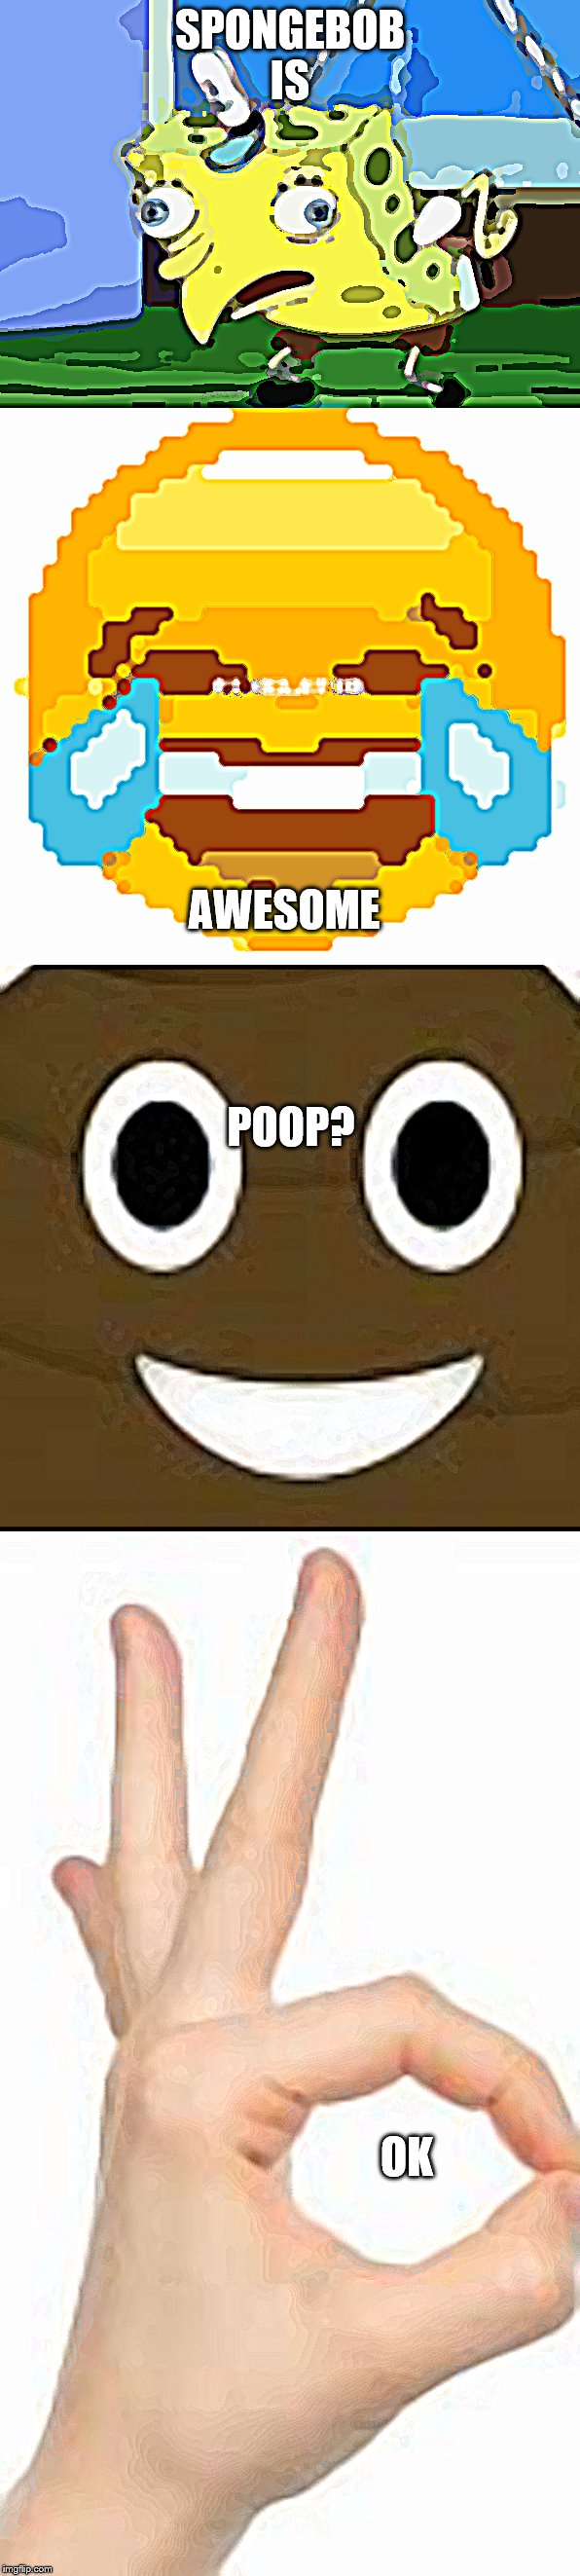 SPONGEBOB IS; POOP? AWESOME; OK | image tagged in memes,mocking spongebob | made w/ Imgflip meme maker